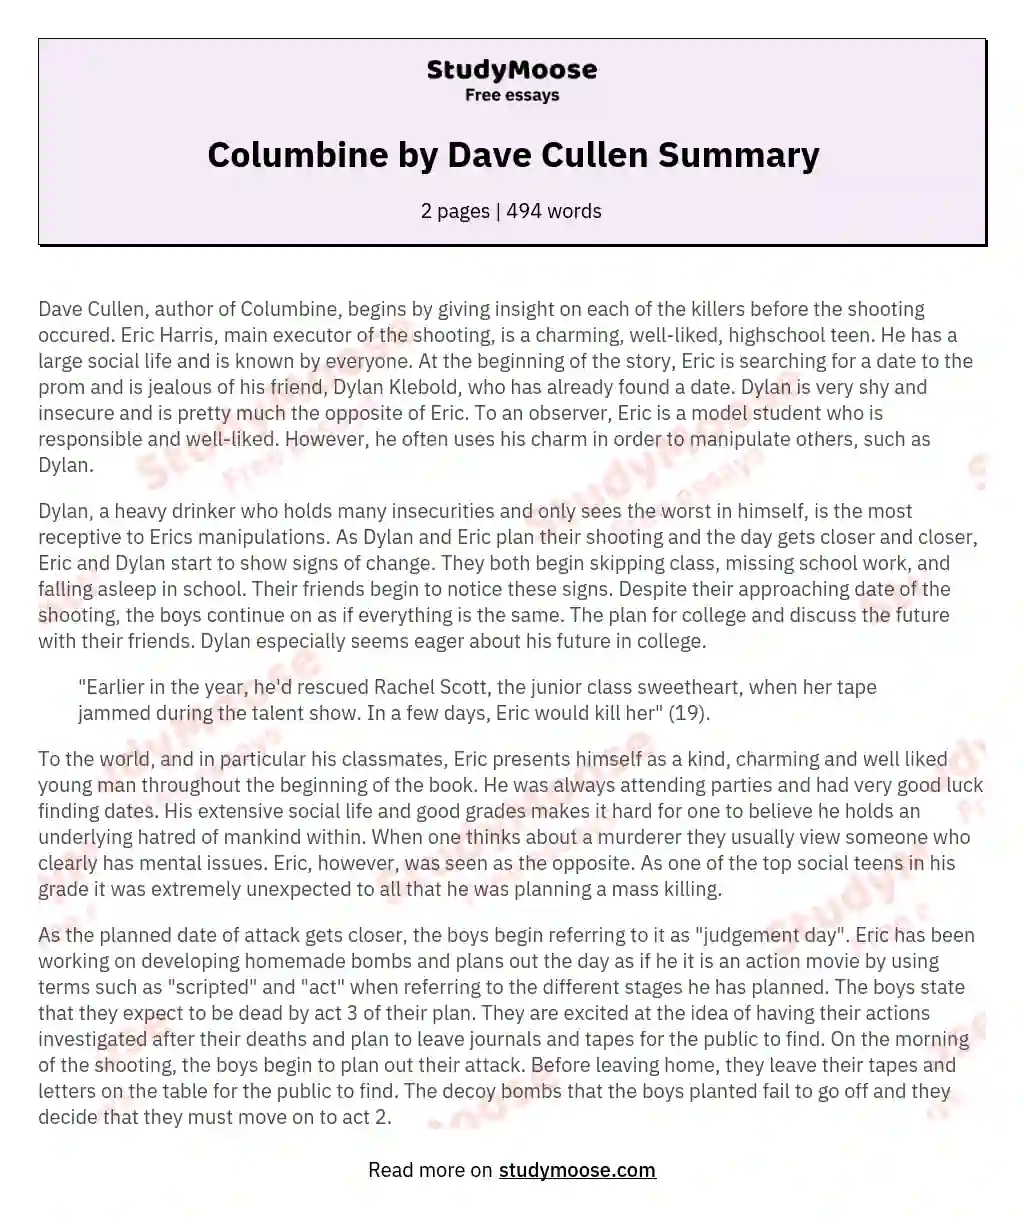 Columbine by Dave Cullen Summary essay